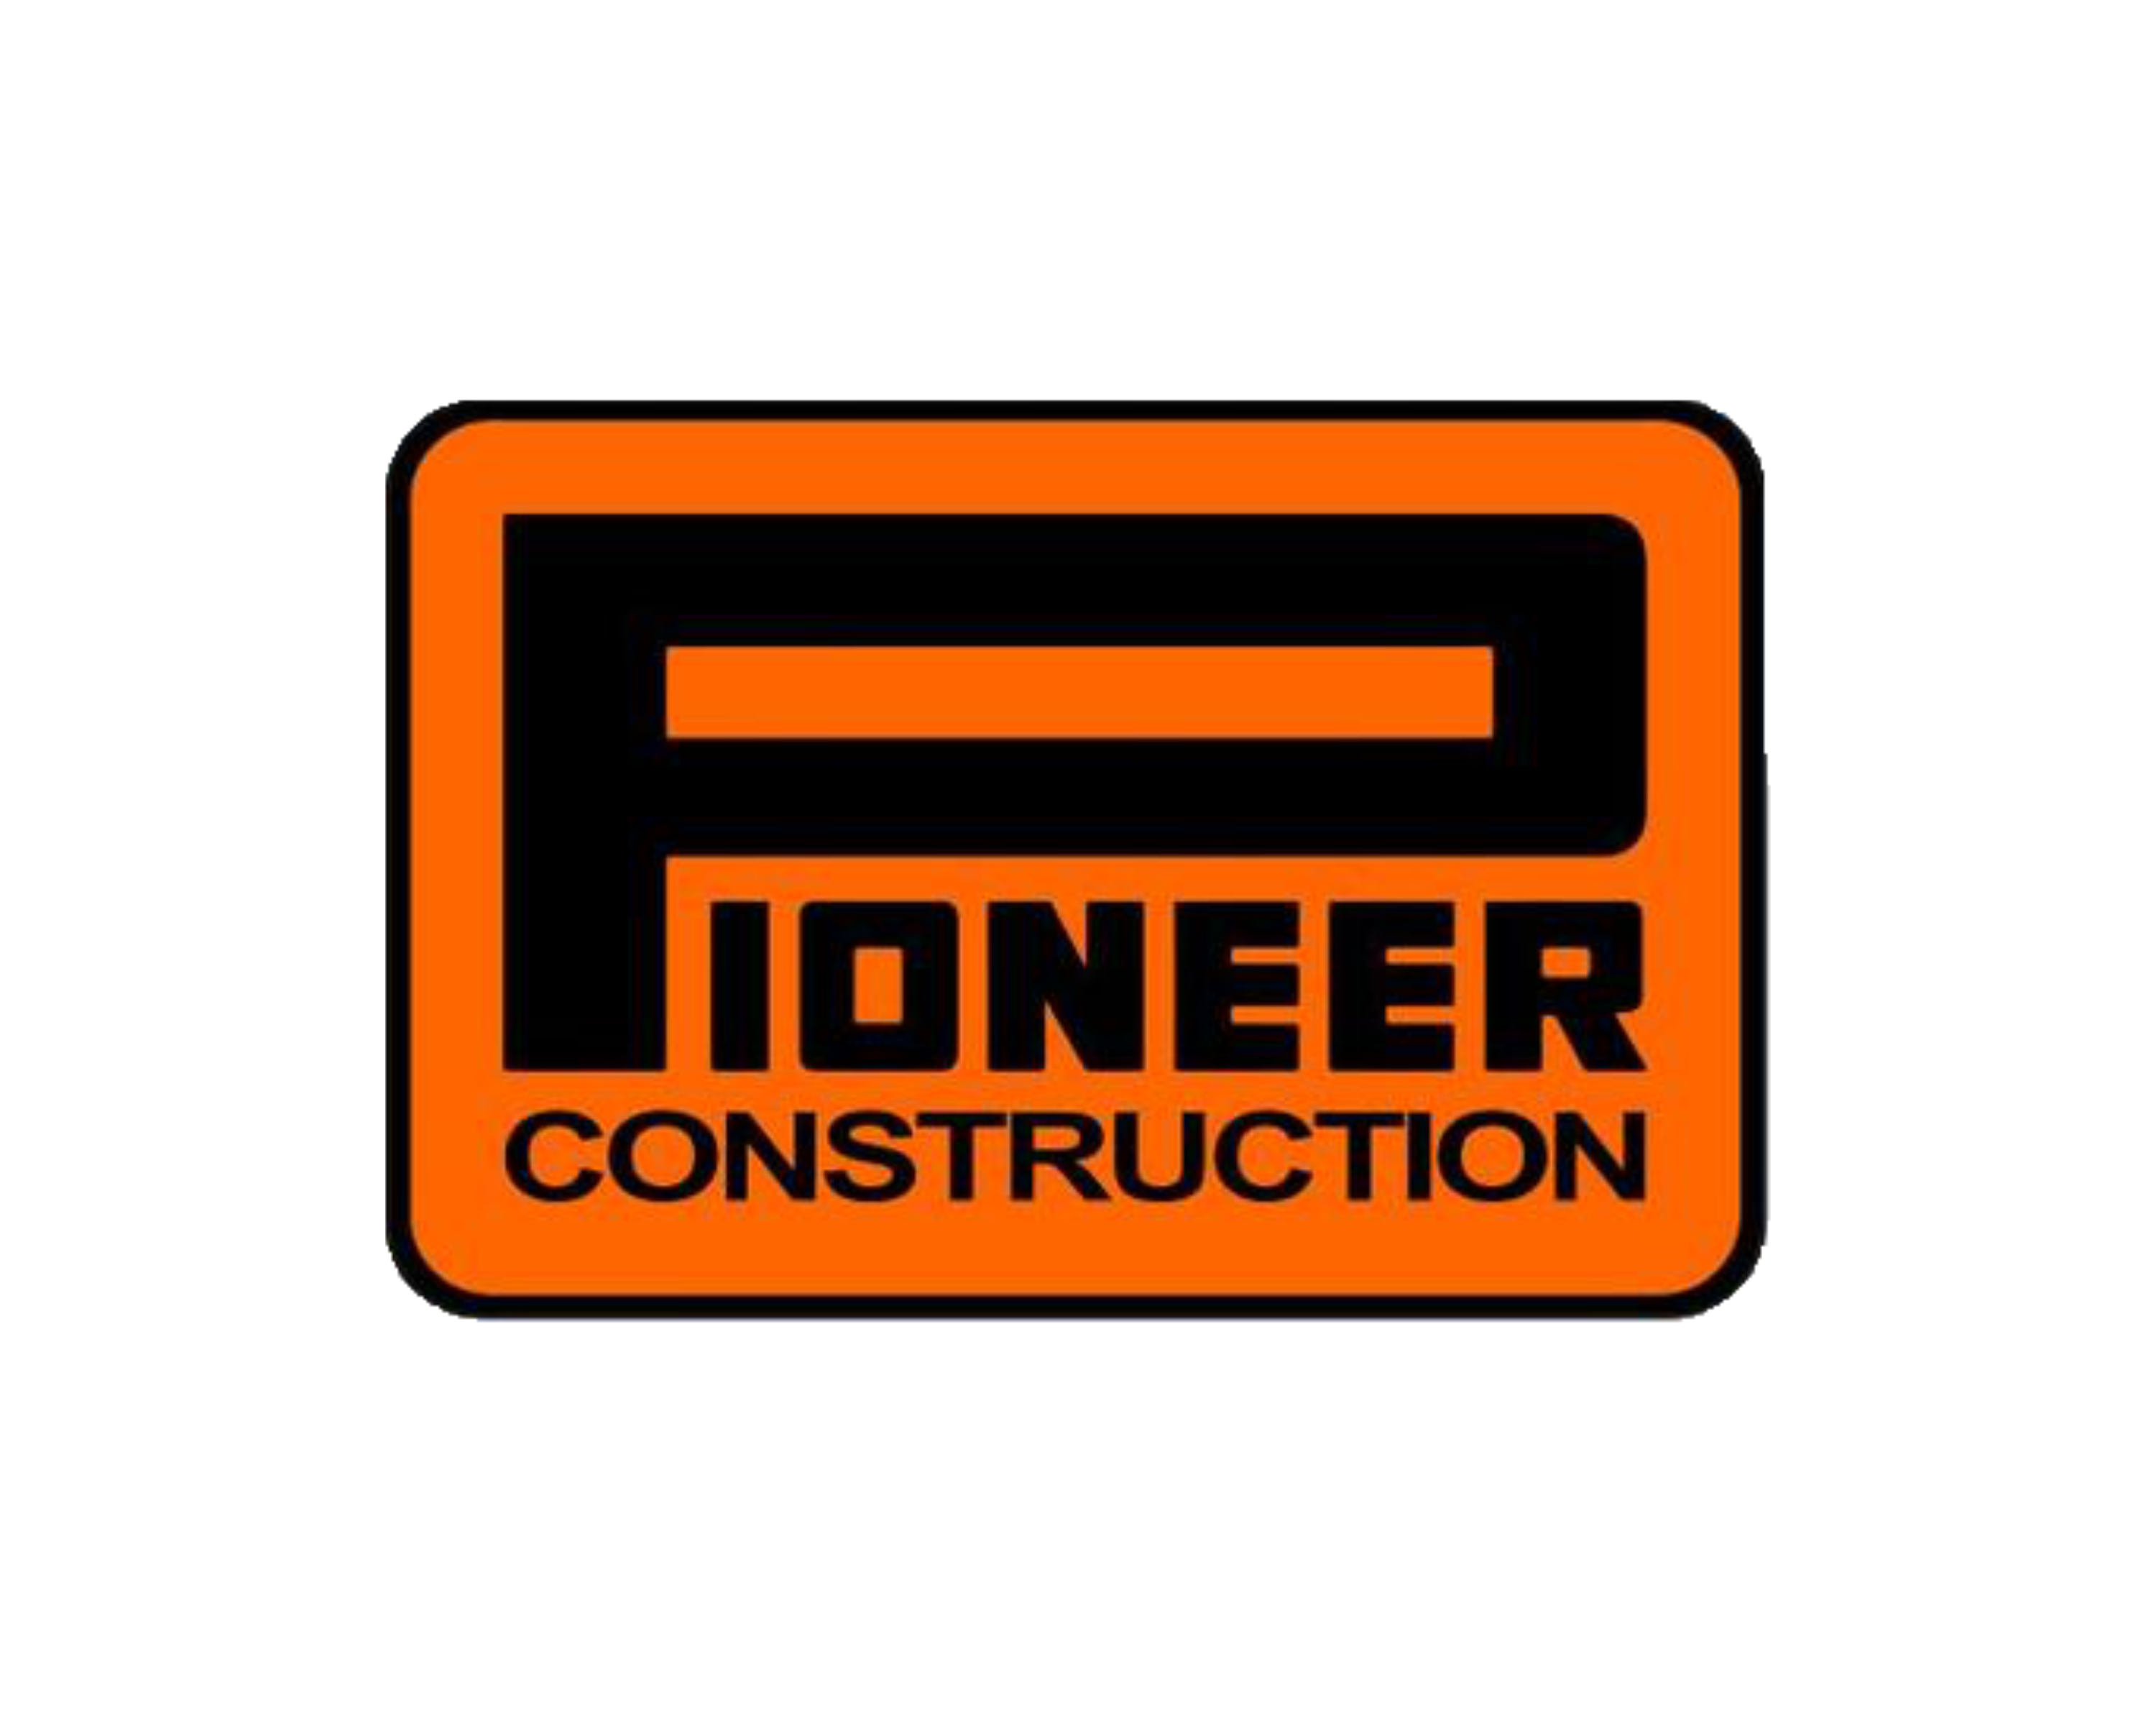 Pioneer Construction